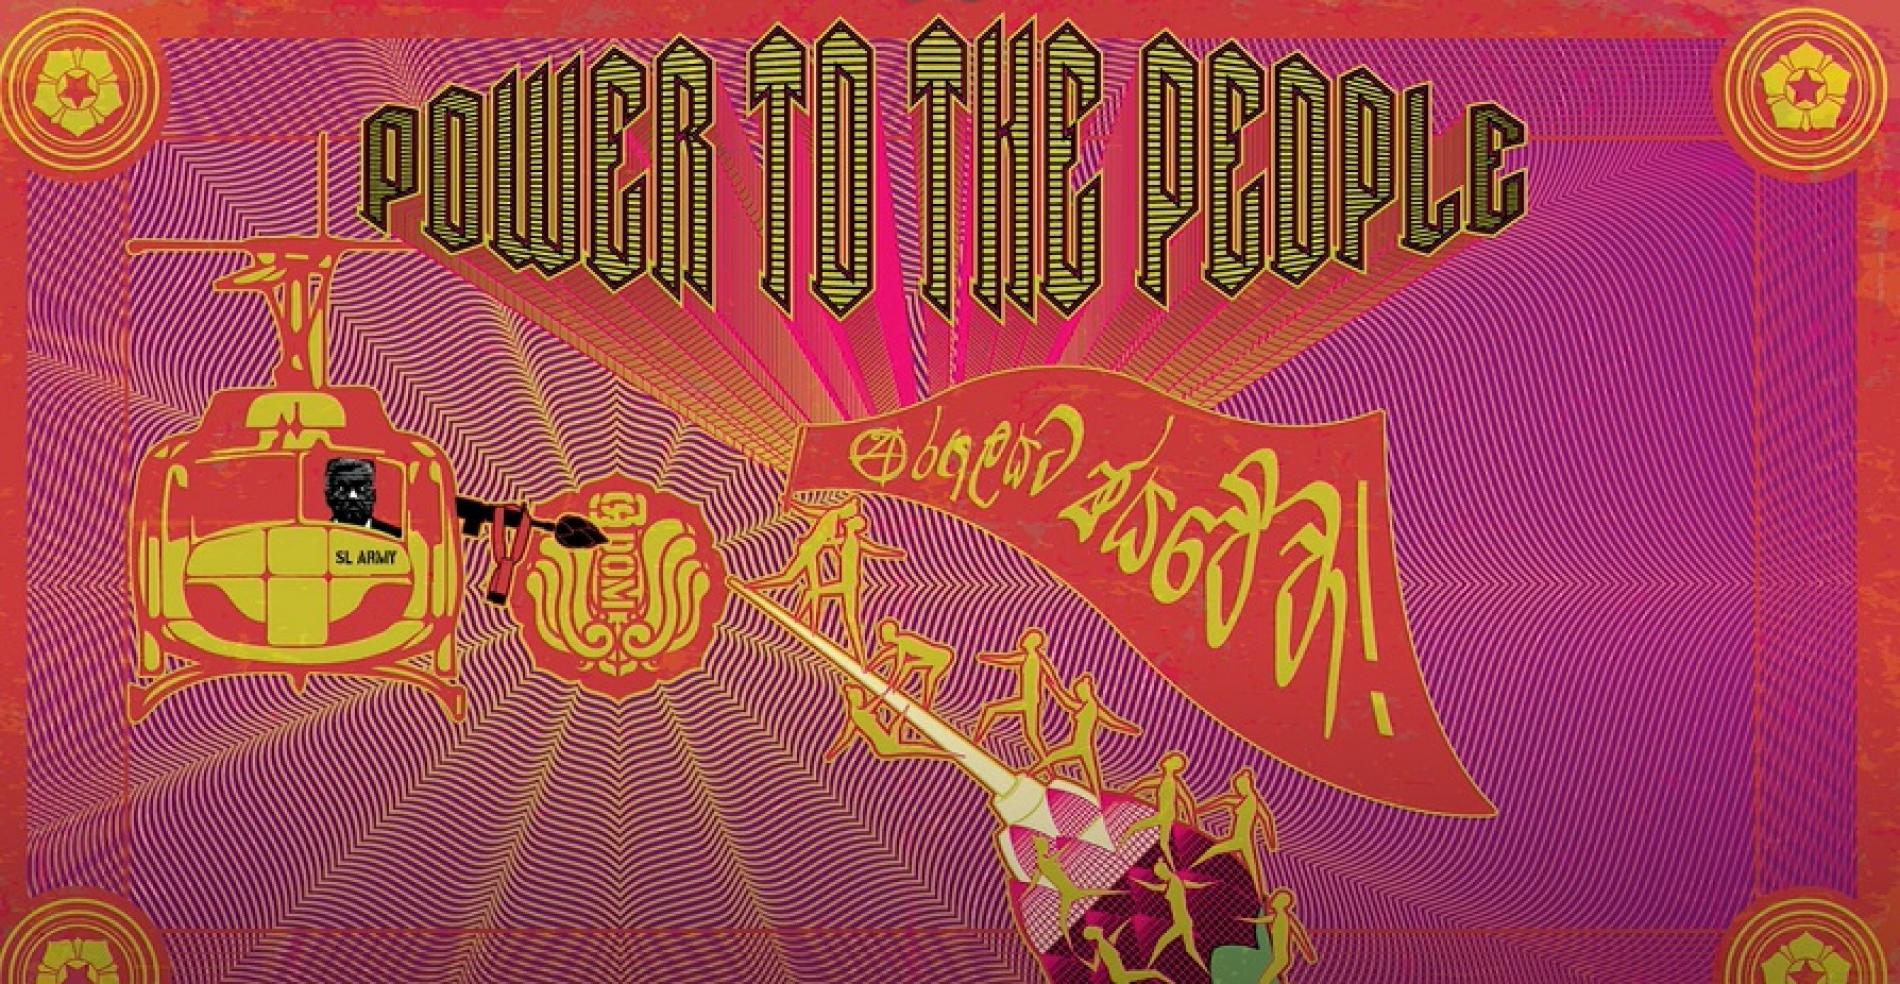 New Music : Power To The People! අරගලයට ජය වේවා! (SPLIT EP) – Agni ‘N Resonance